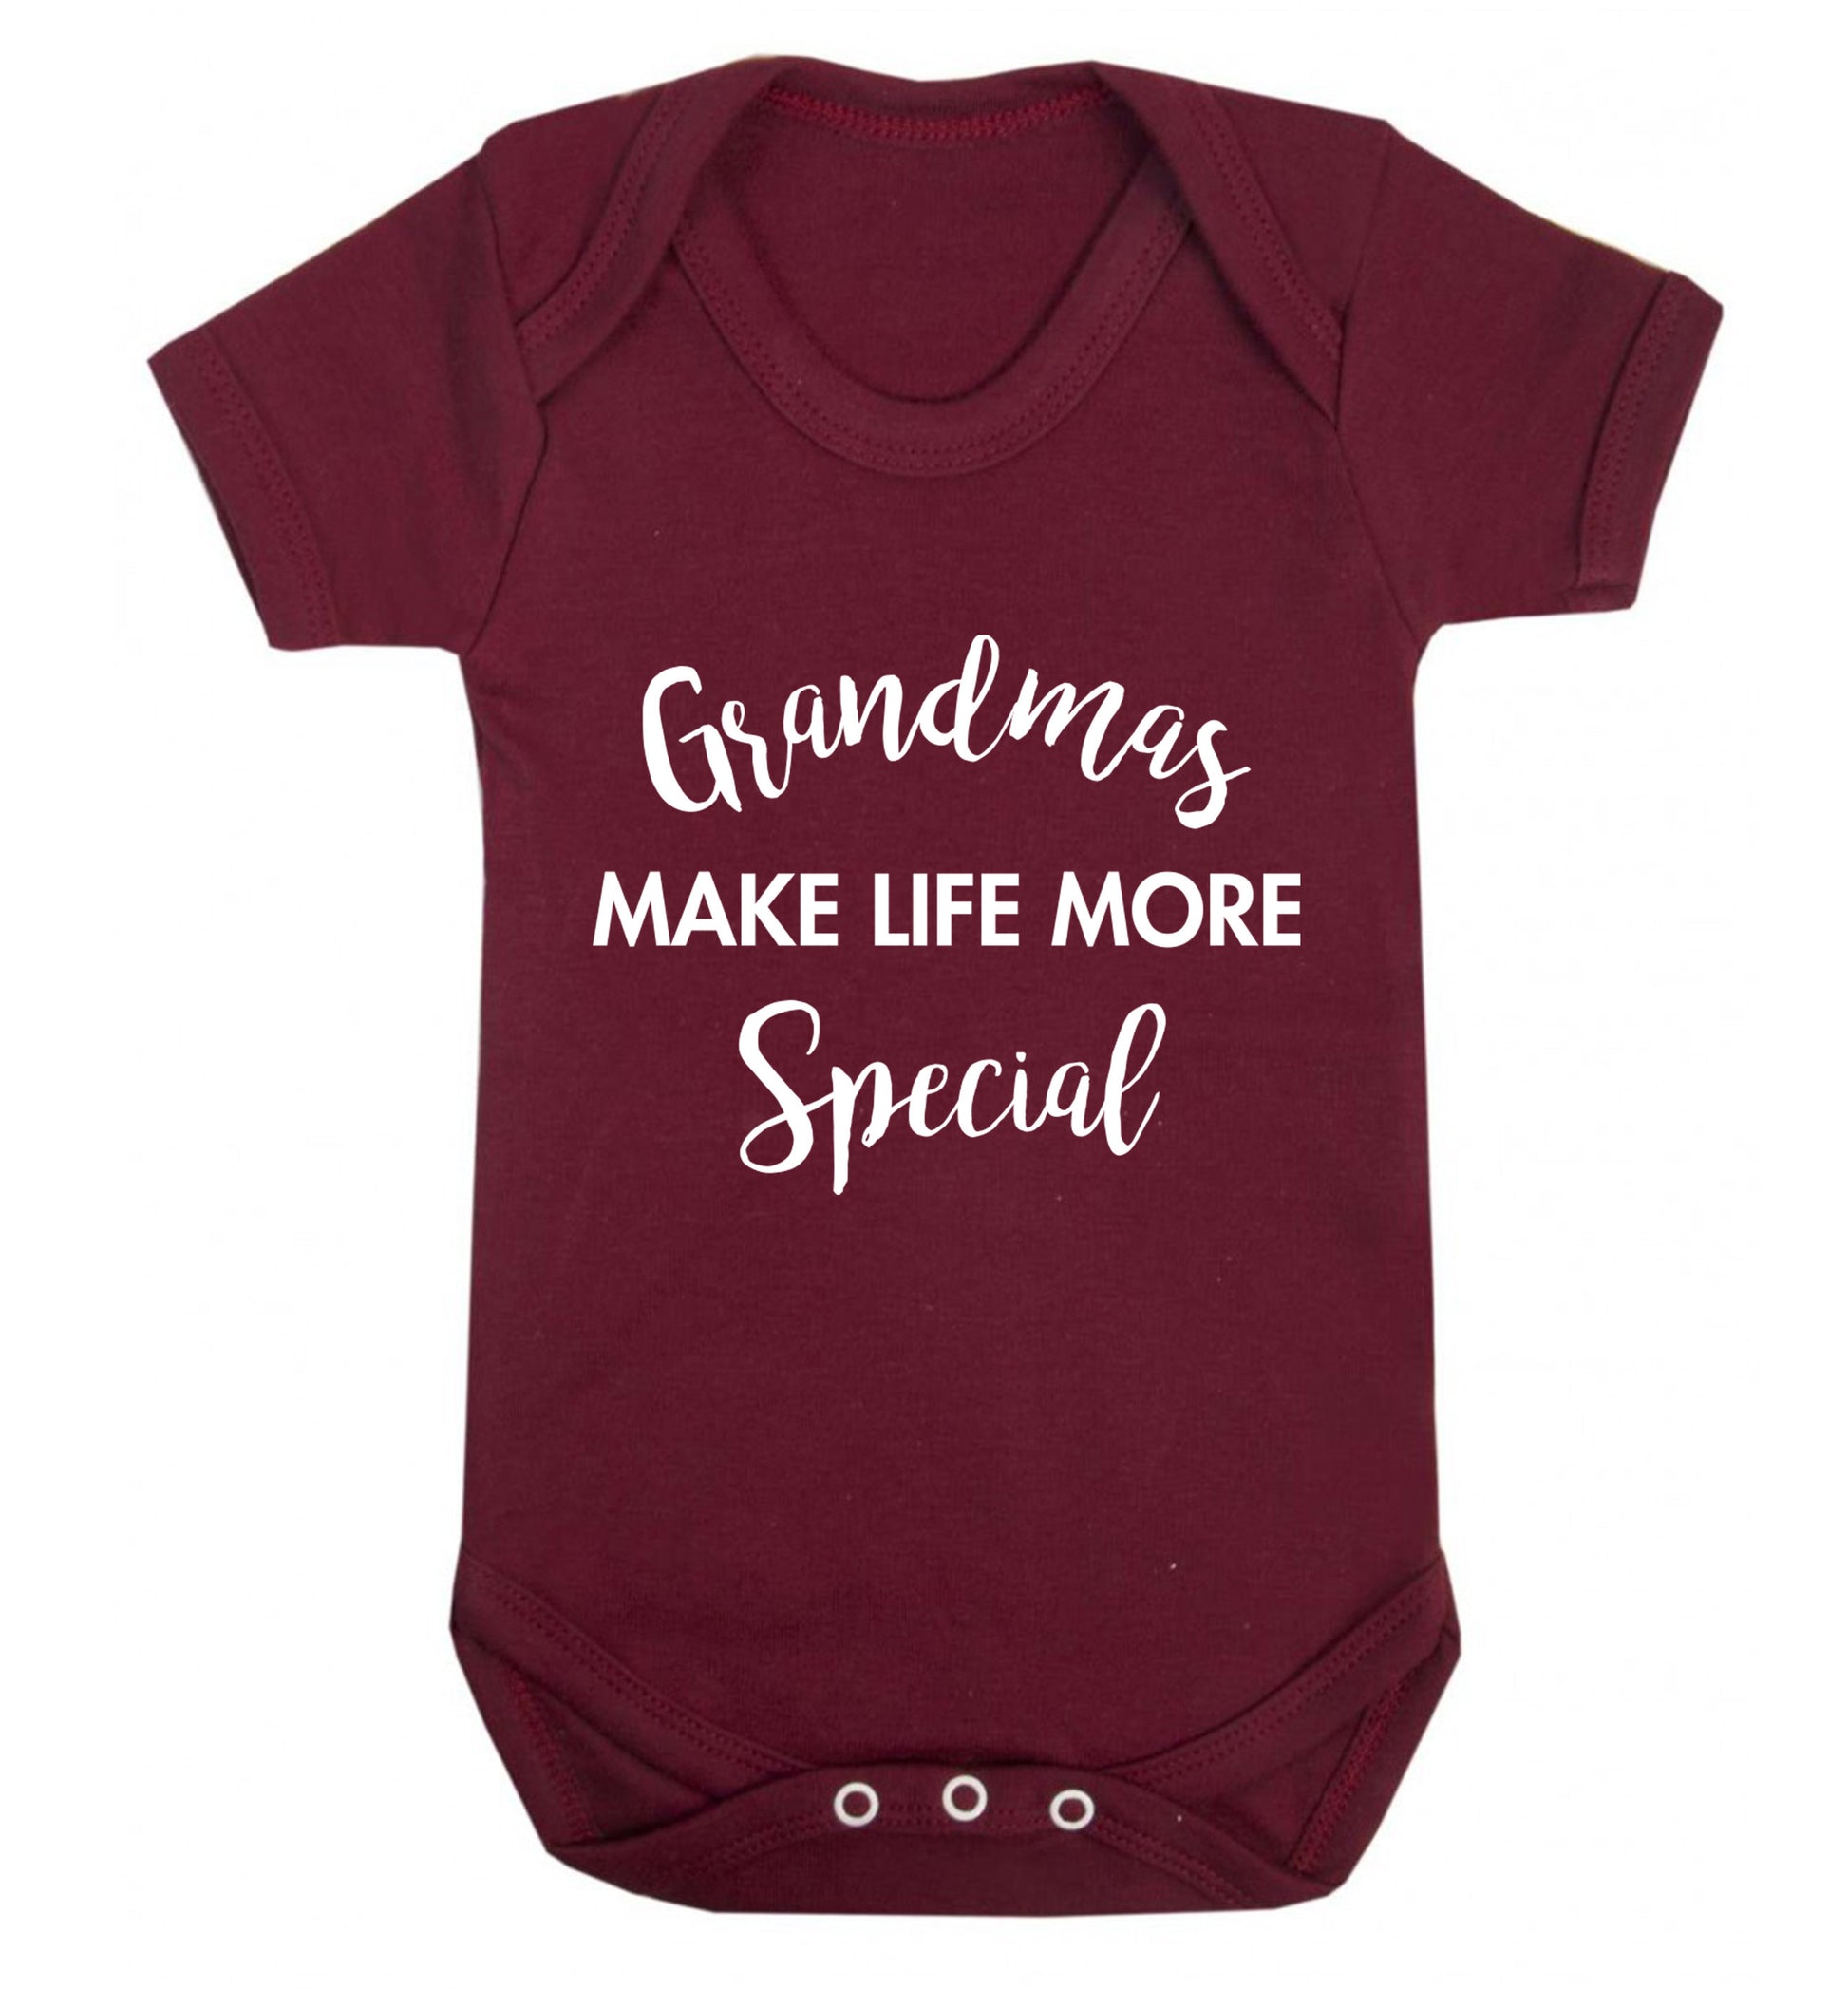 Grandmas make life more special Baby Vest maroon 18-24 months